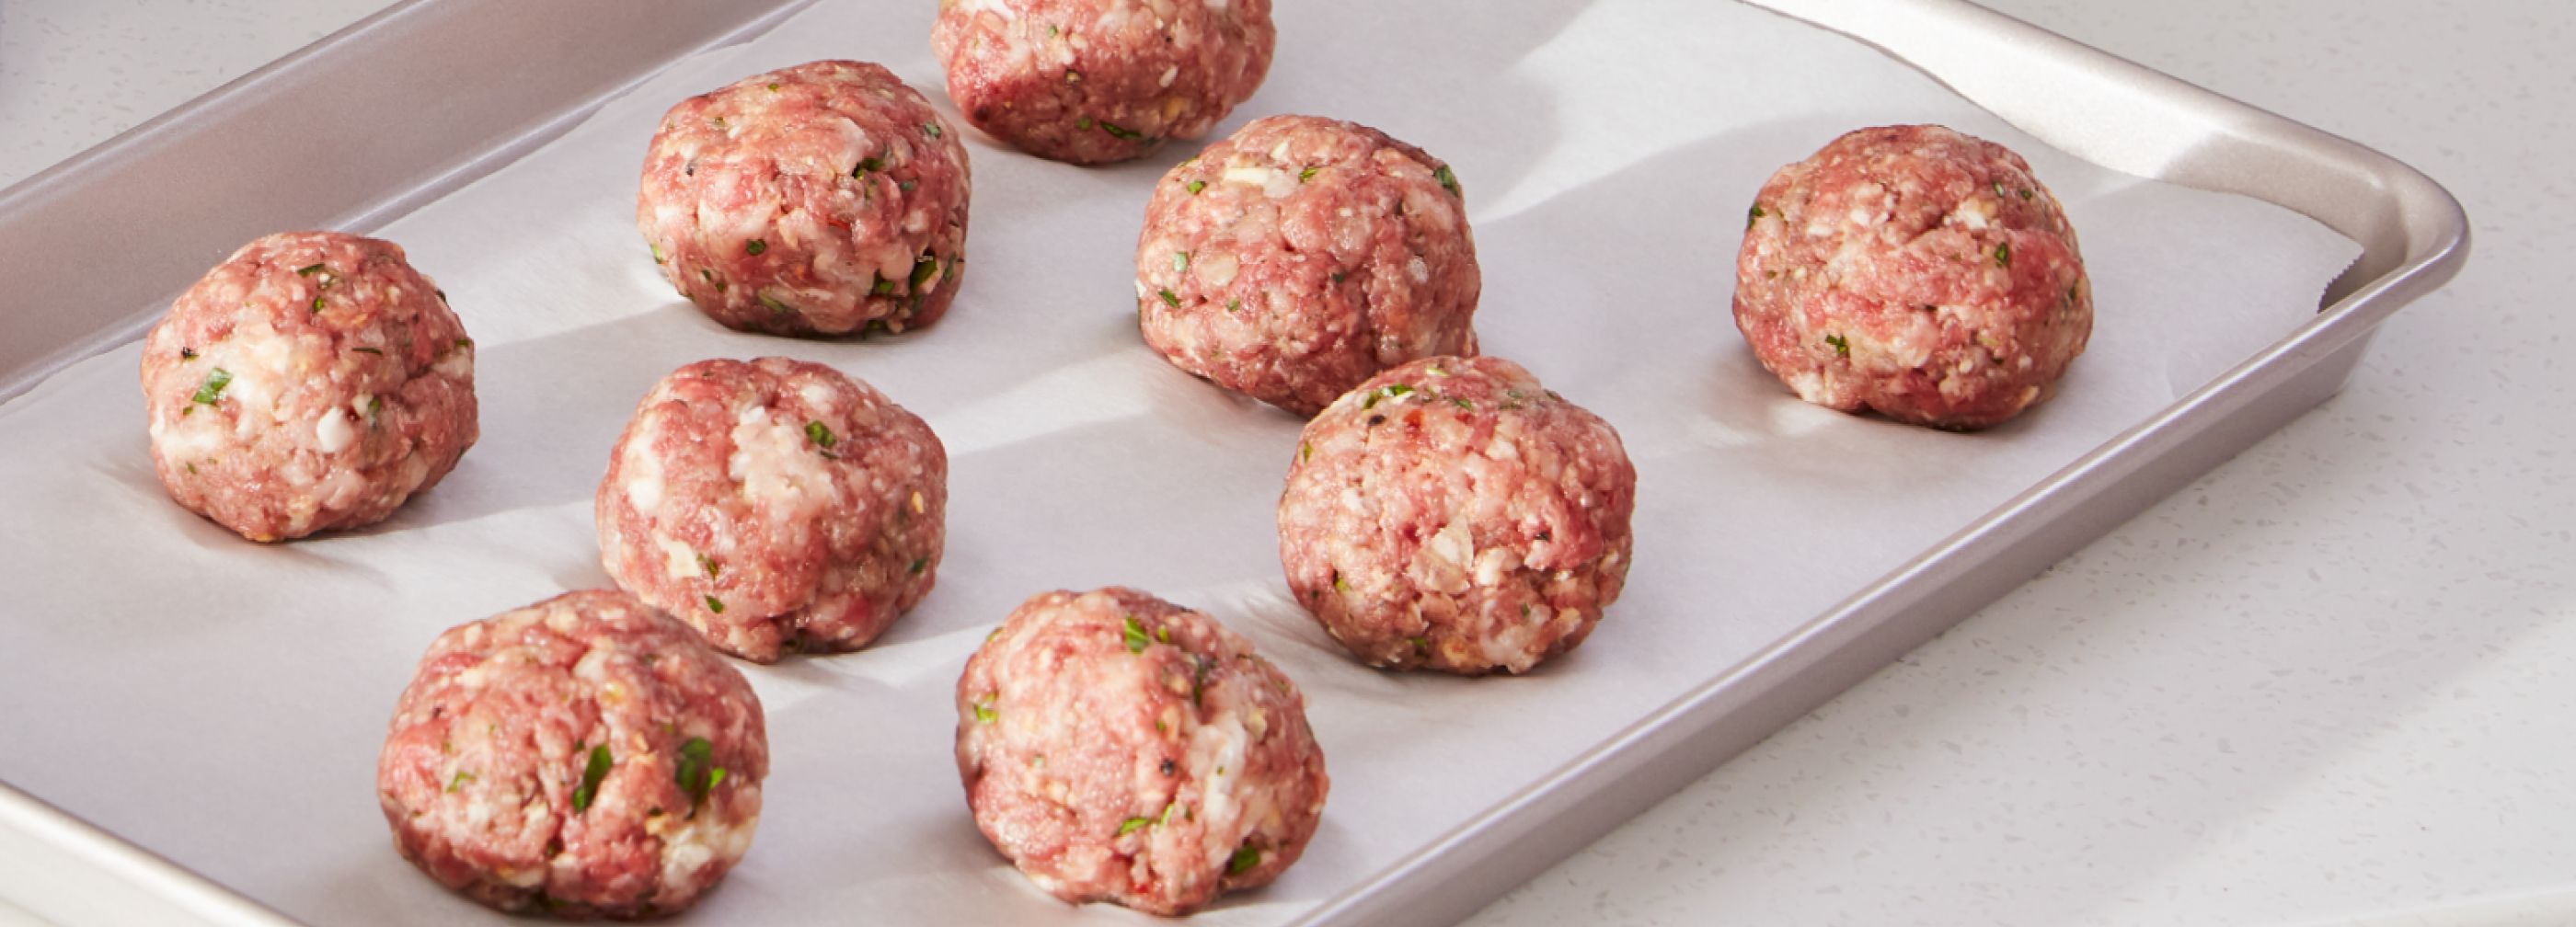 Homemade Swedish meatballs on a sheet pan